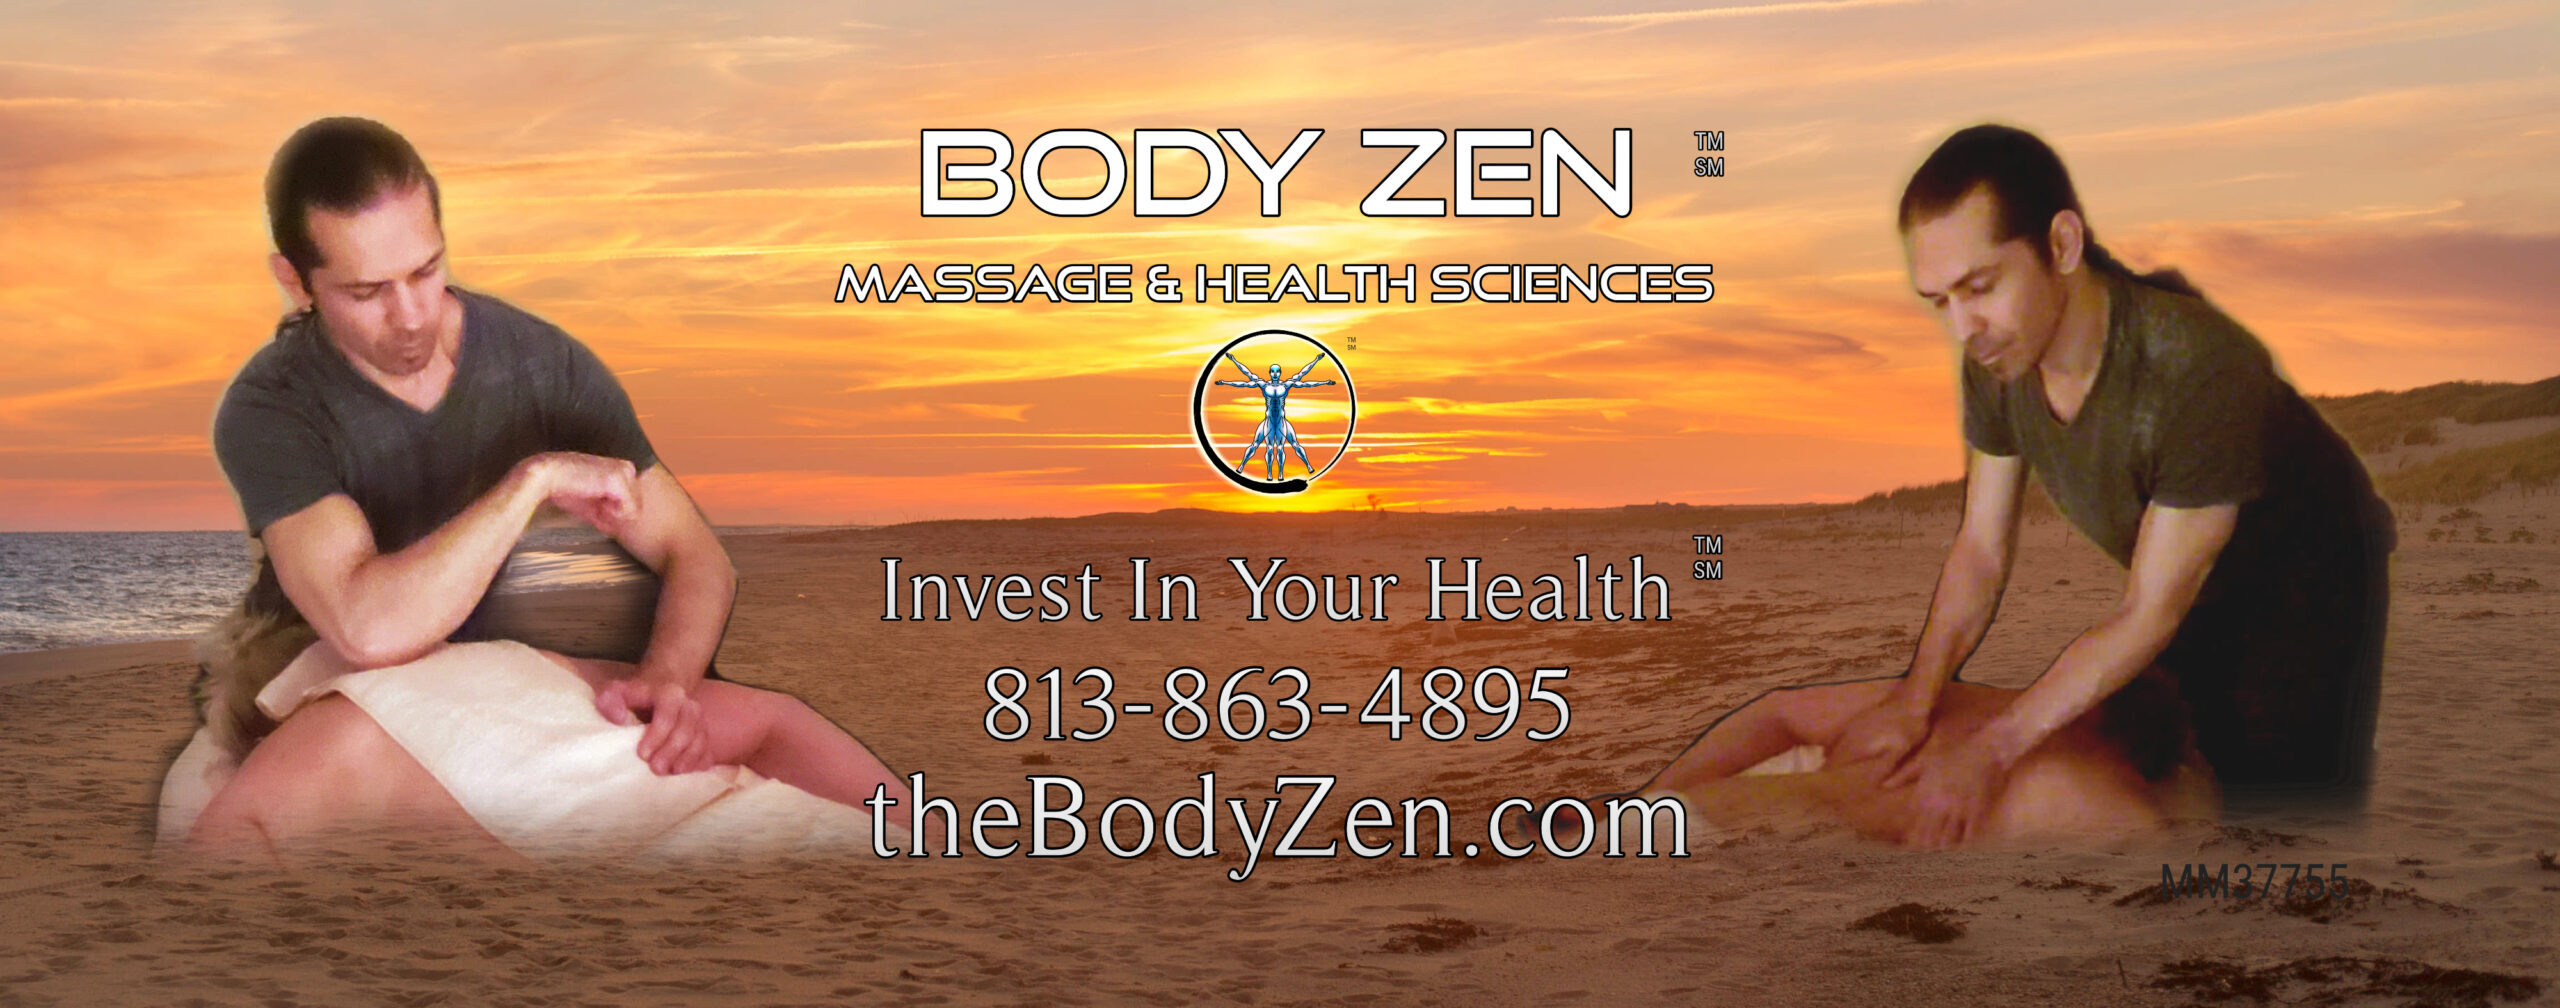 Body Zen Massage & Health Sciences